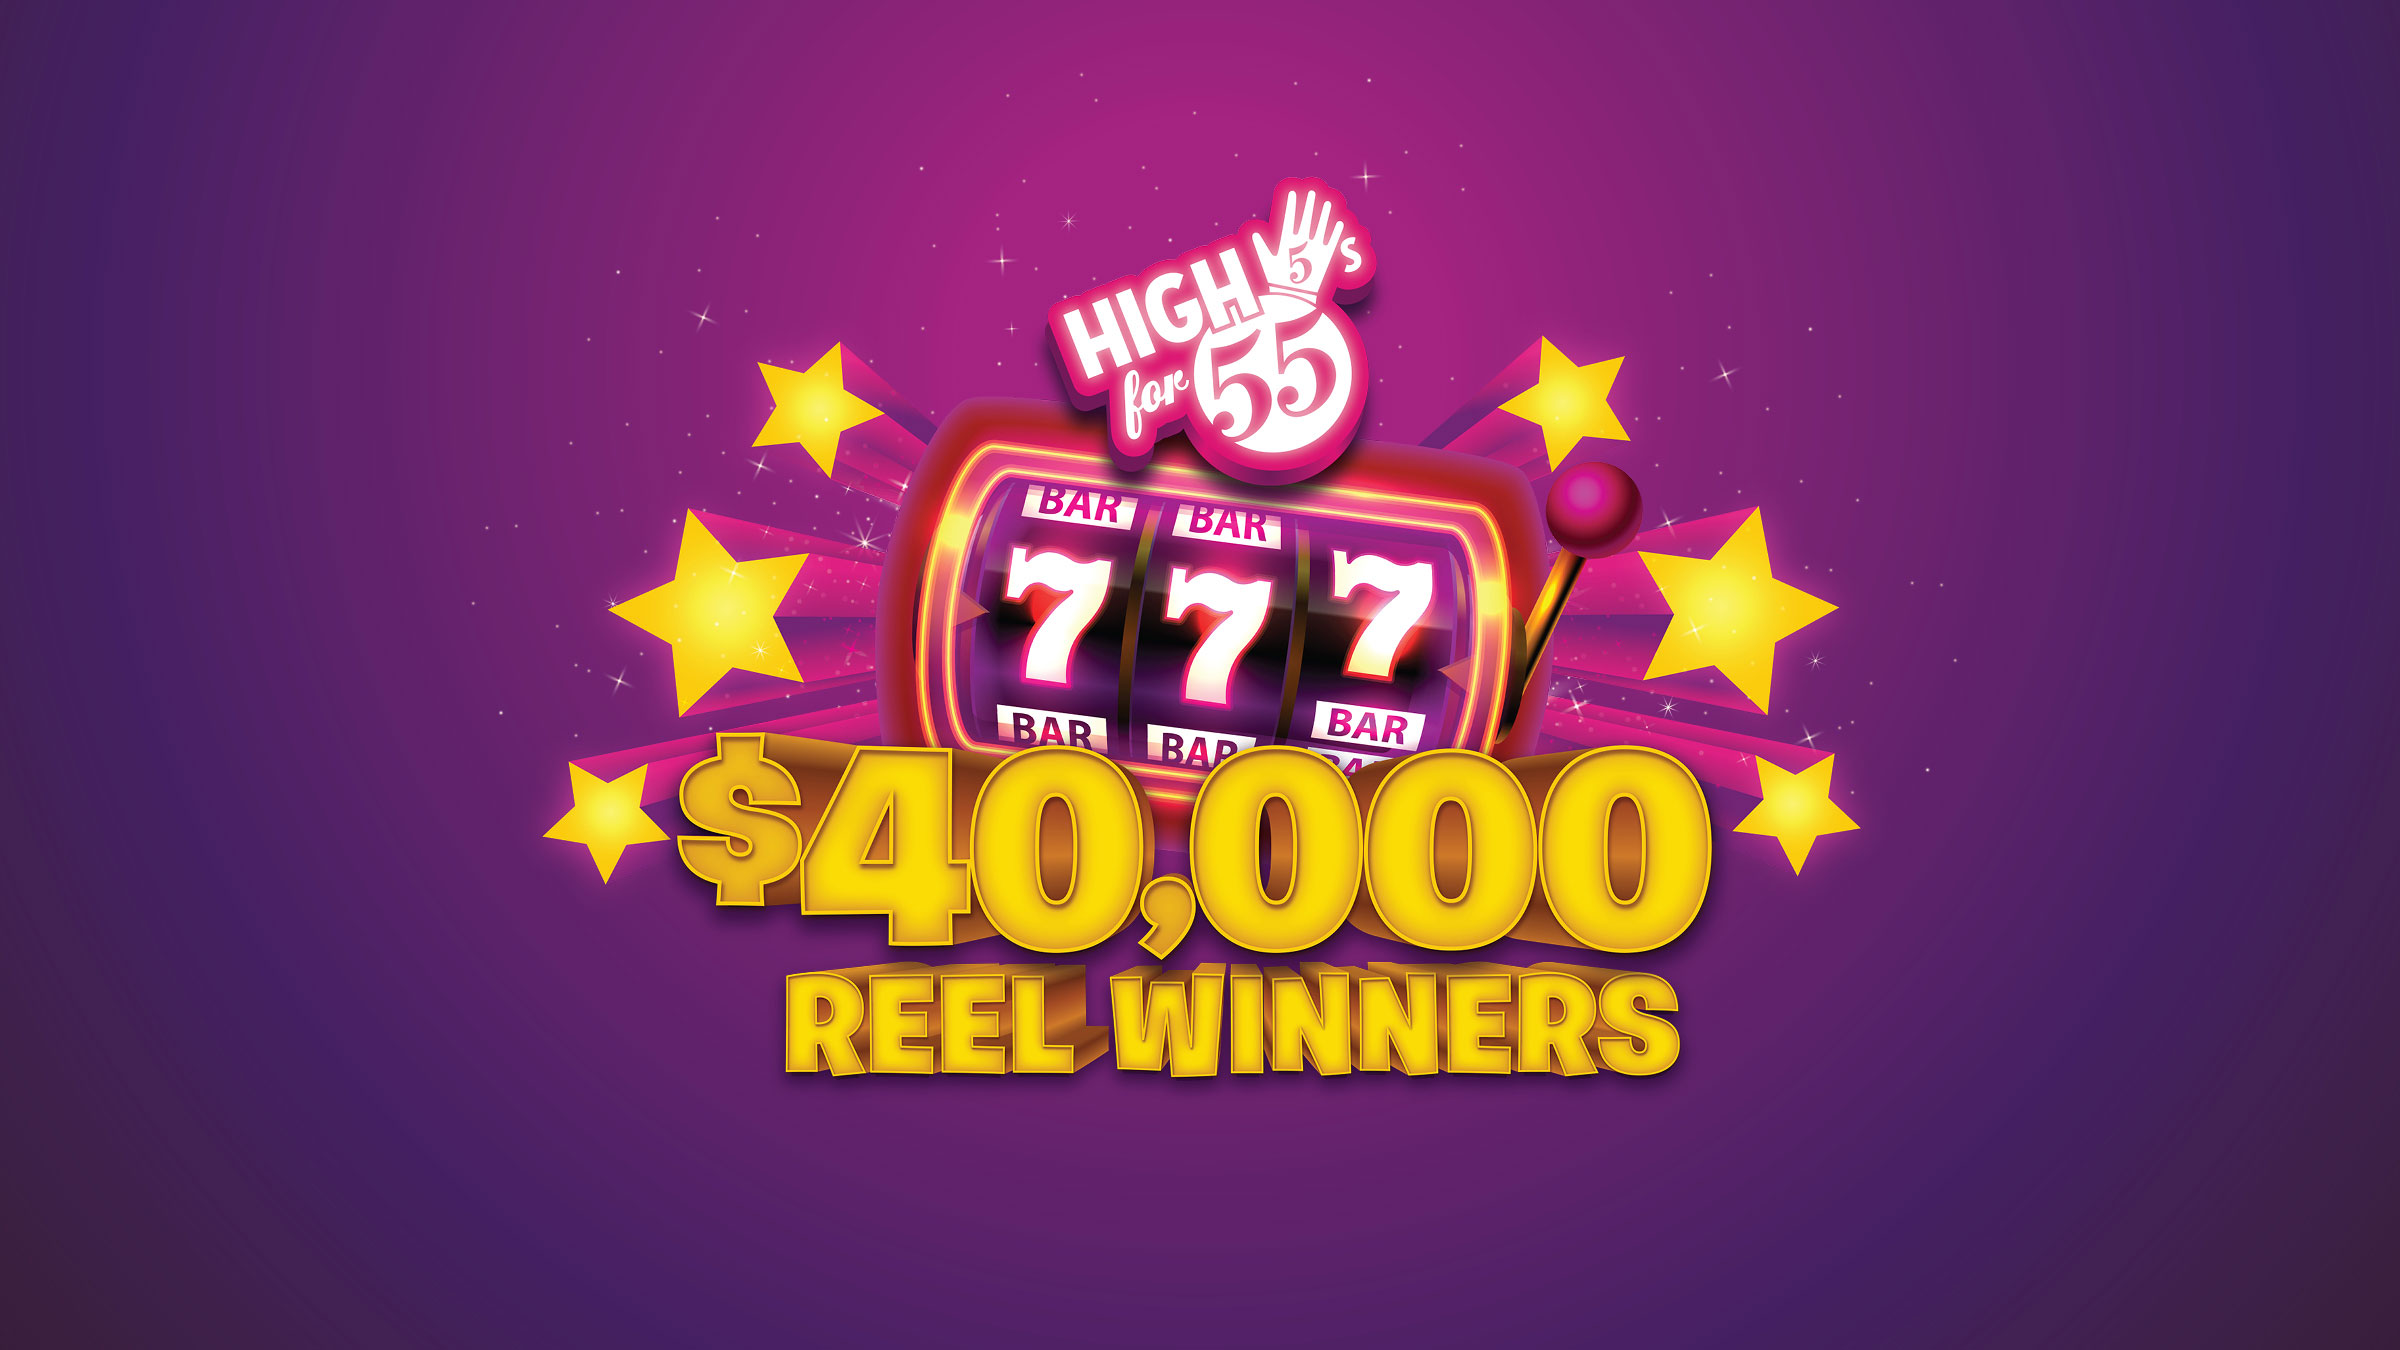 High 5s for 55s - $40,000 REEL WINNERS